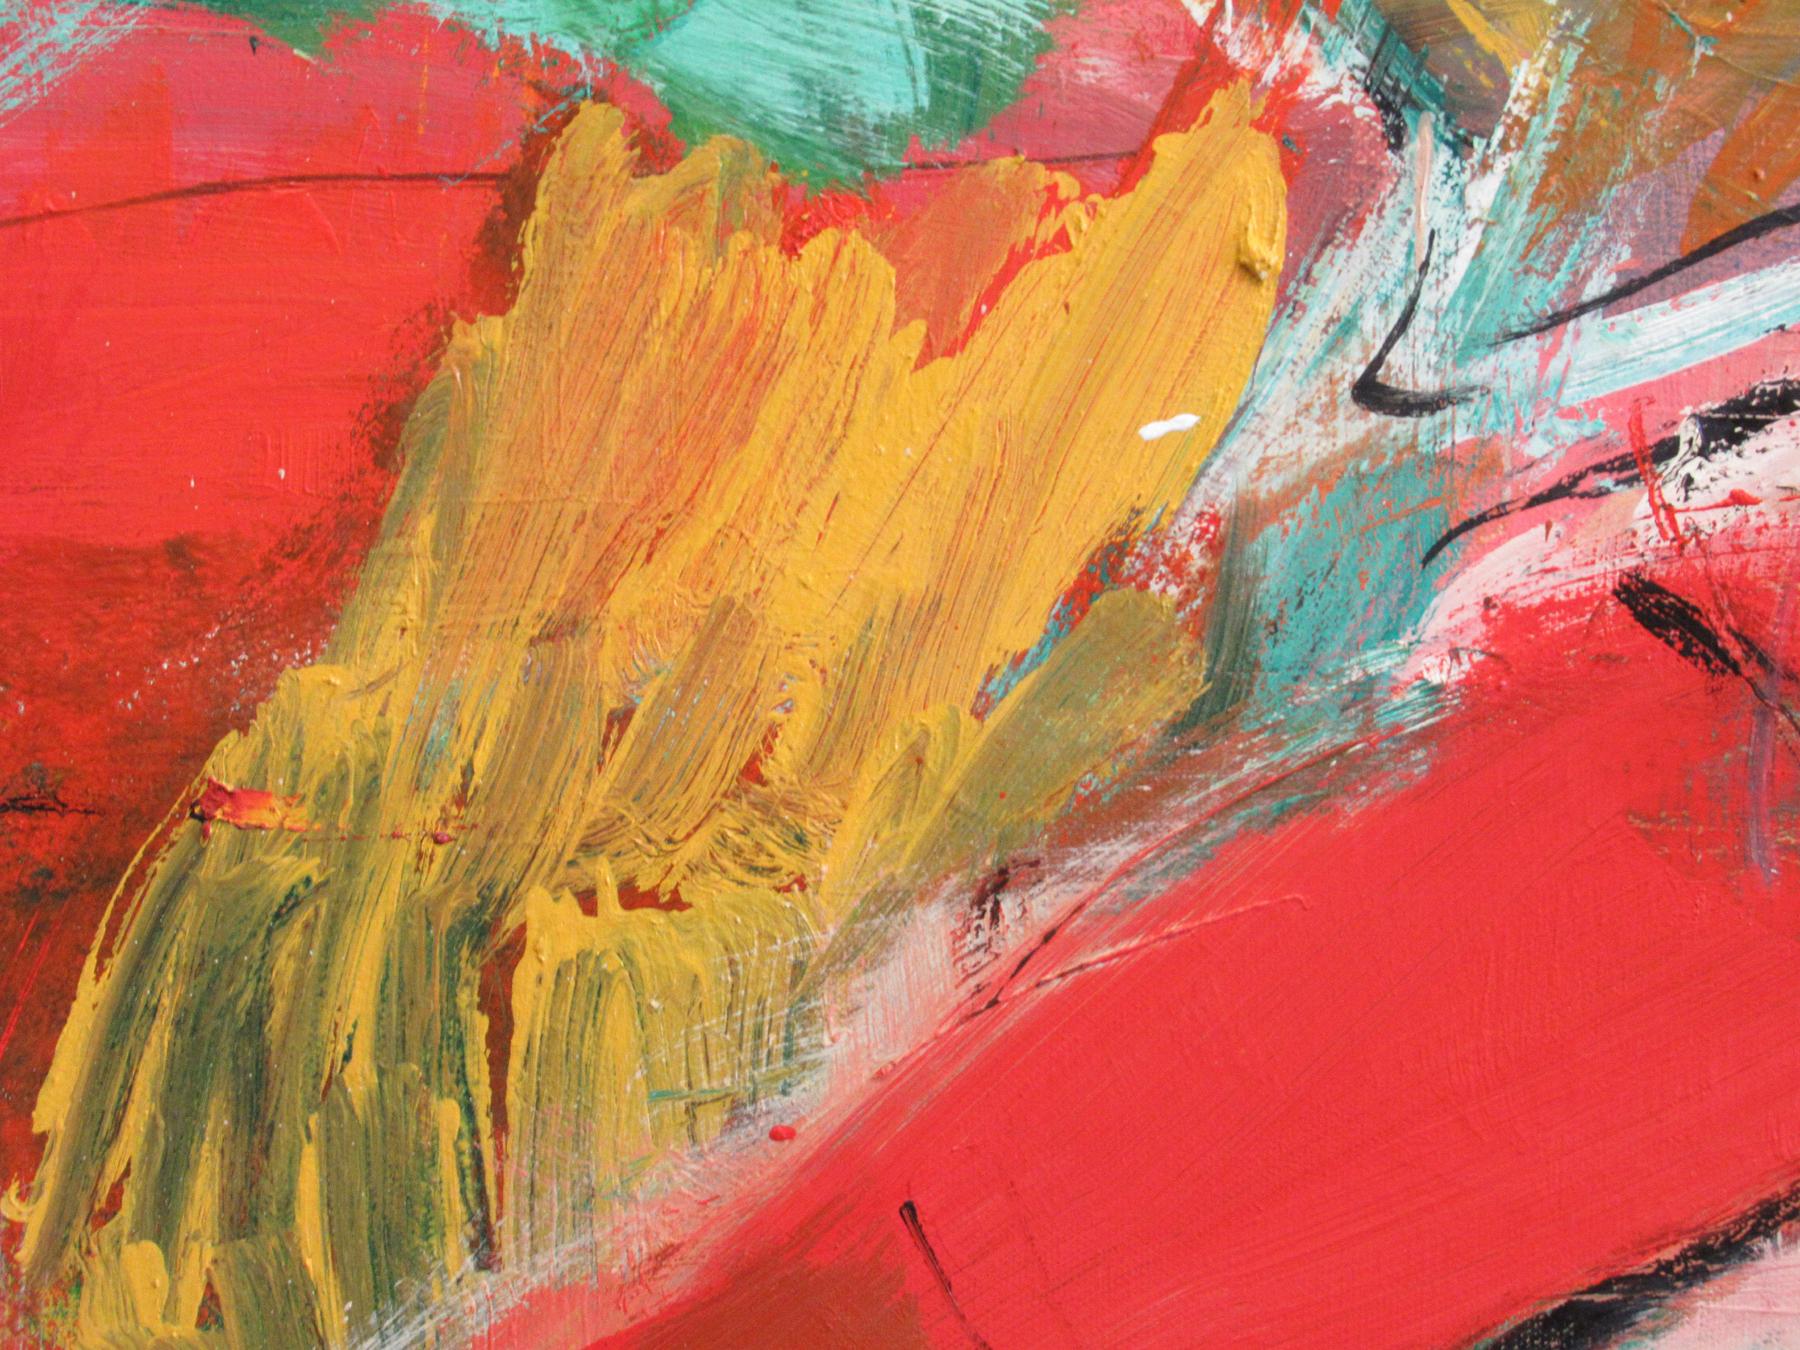 Peinture expressionniste abstraite contemporaine rouge originale signée SONGBIRDS - Painting de William O'Connor